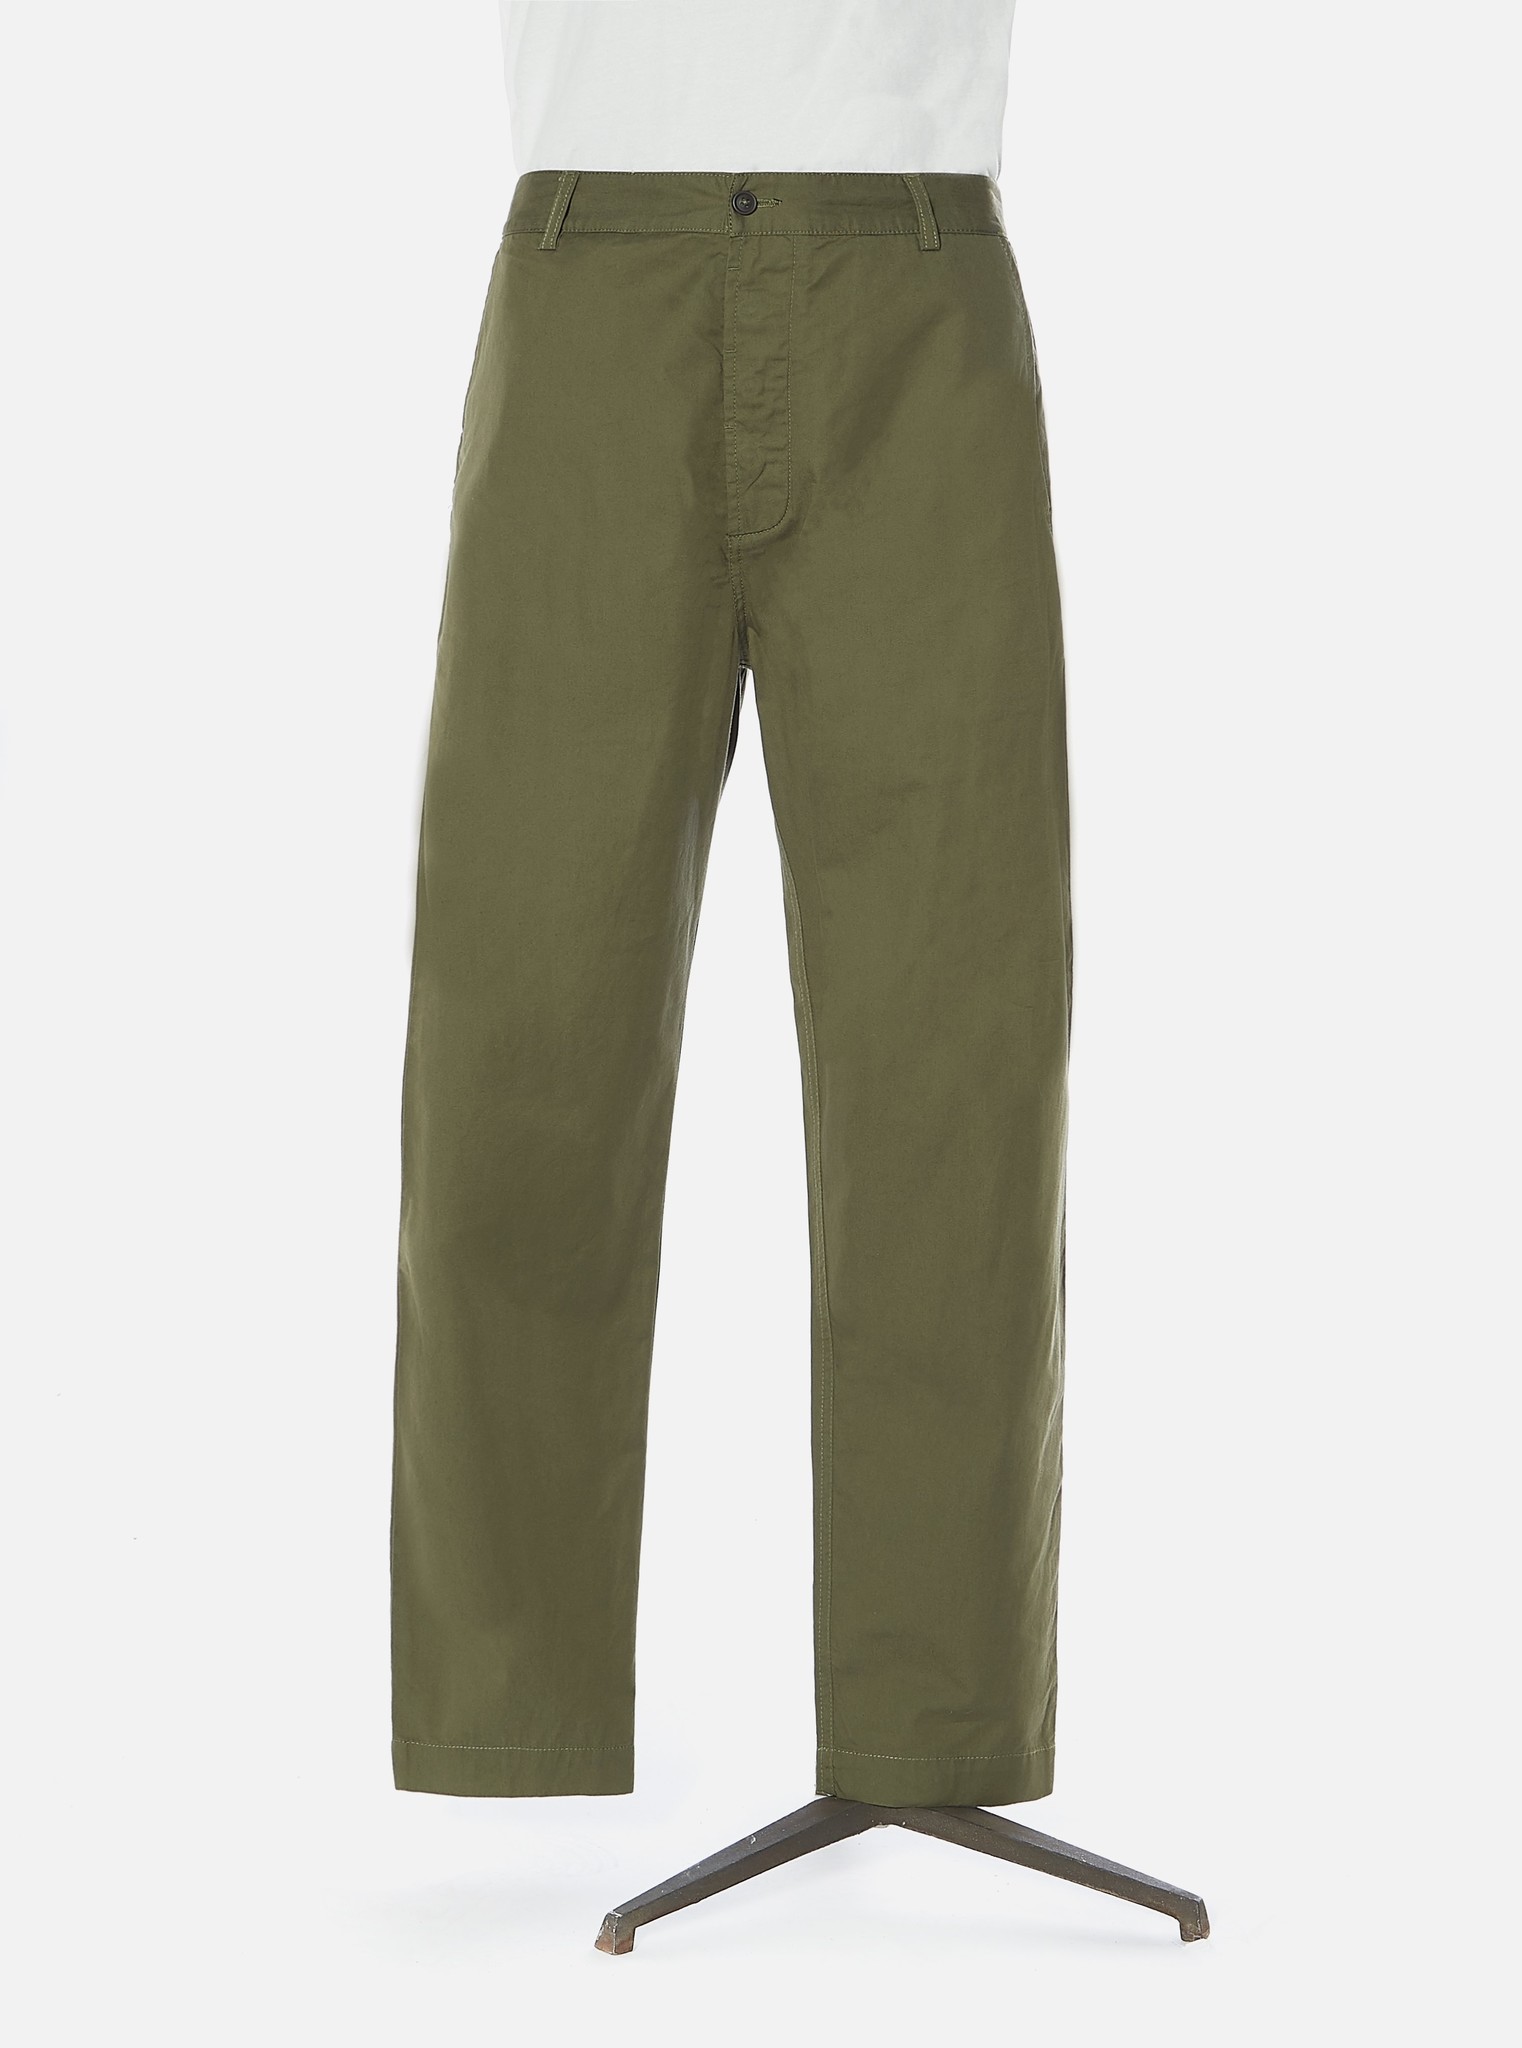 Military Chino Fine Cotton Twill Olive Green-1